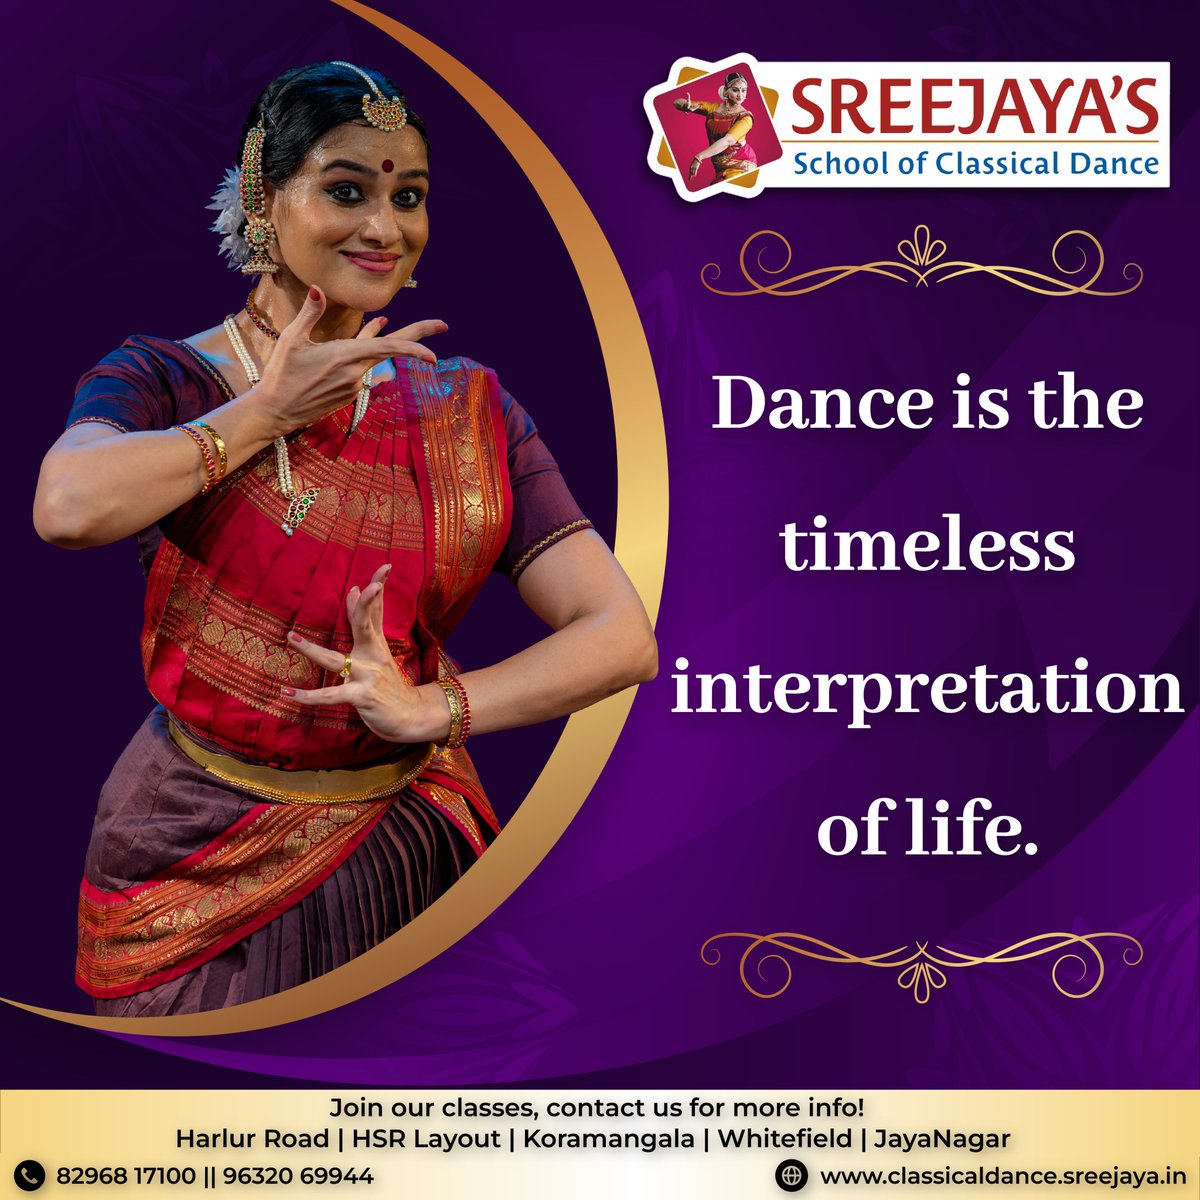 Dance is the timeless interpretation of life\

Learn Professional #Bharatanatyam SSCD 

#dancelove #dancequote #thankstodance #SreejayaSSCD #classicaldanceclasses #DanceLessons #bharatnatyamdance #DanceClass #Dance #Dancer #bharatnatyamdanceclass #bharatnatyamlove #Dancetime